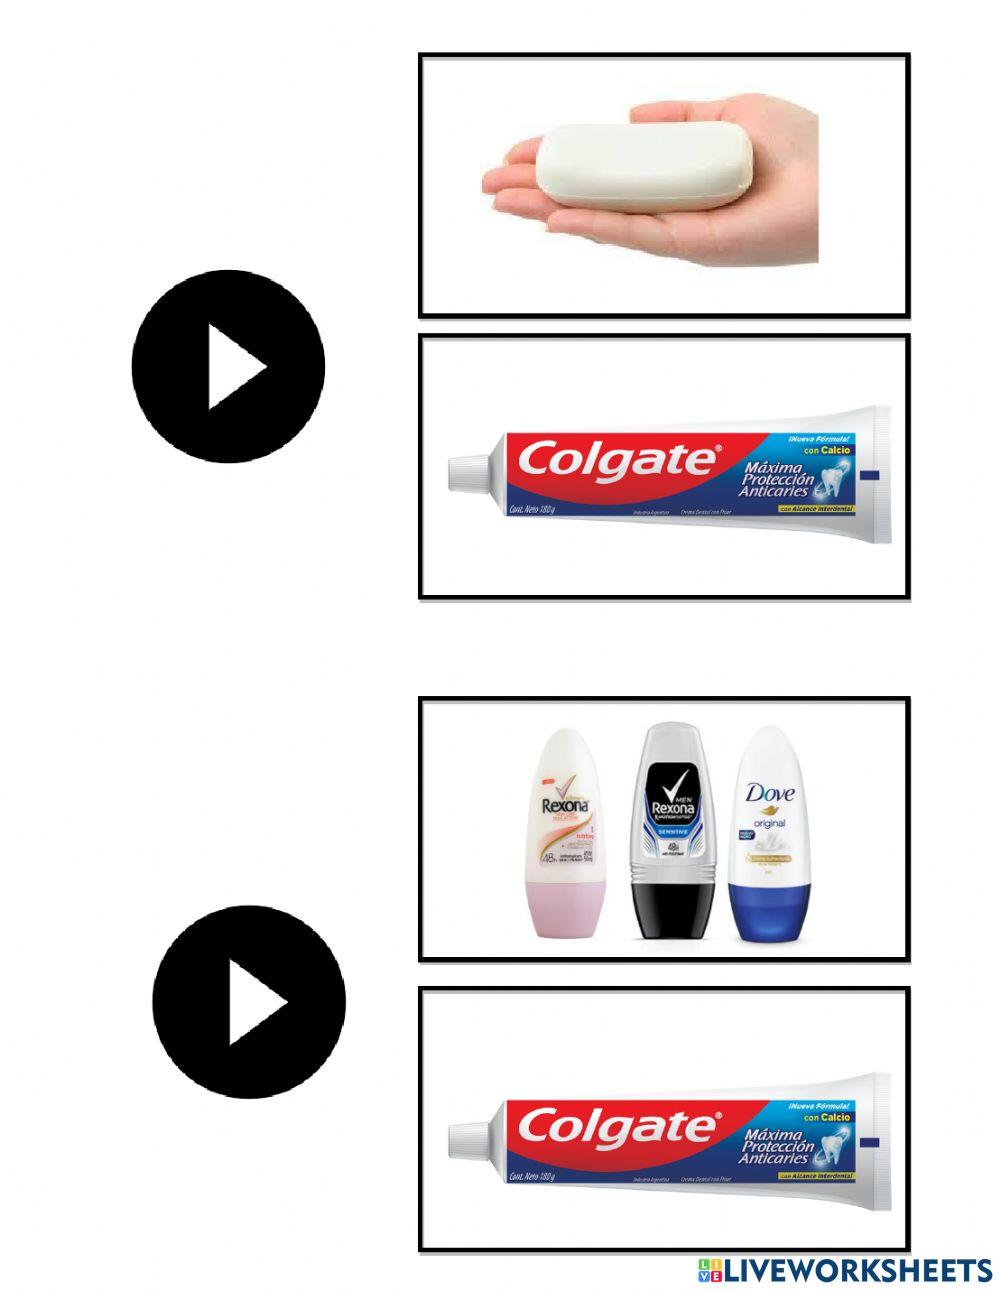 Elementos de higiene